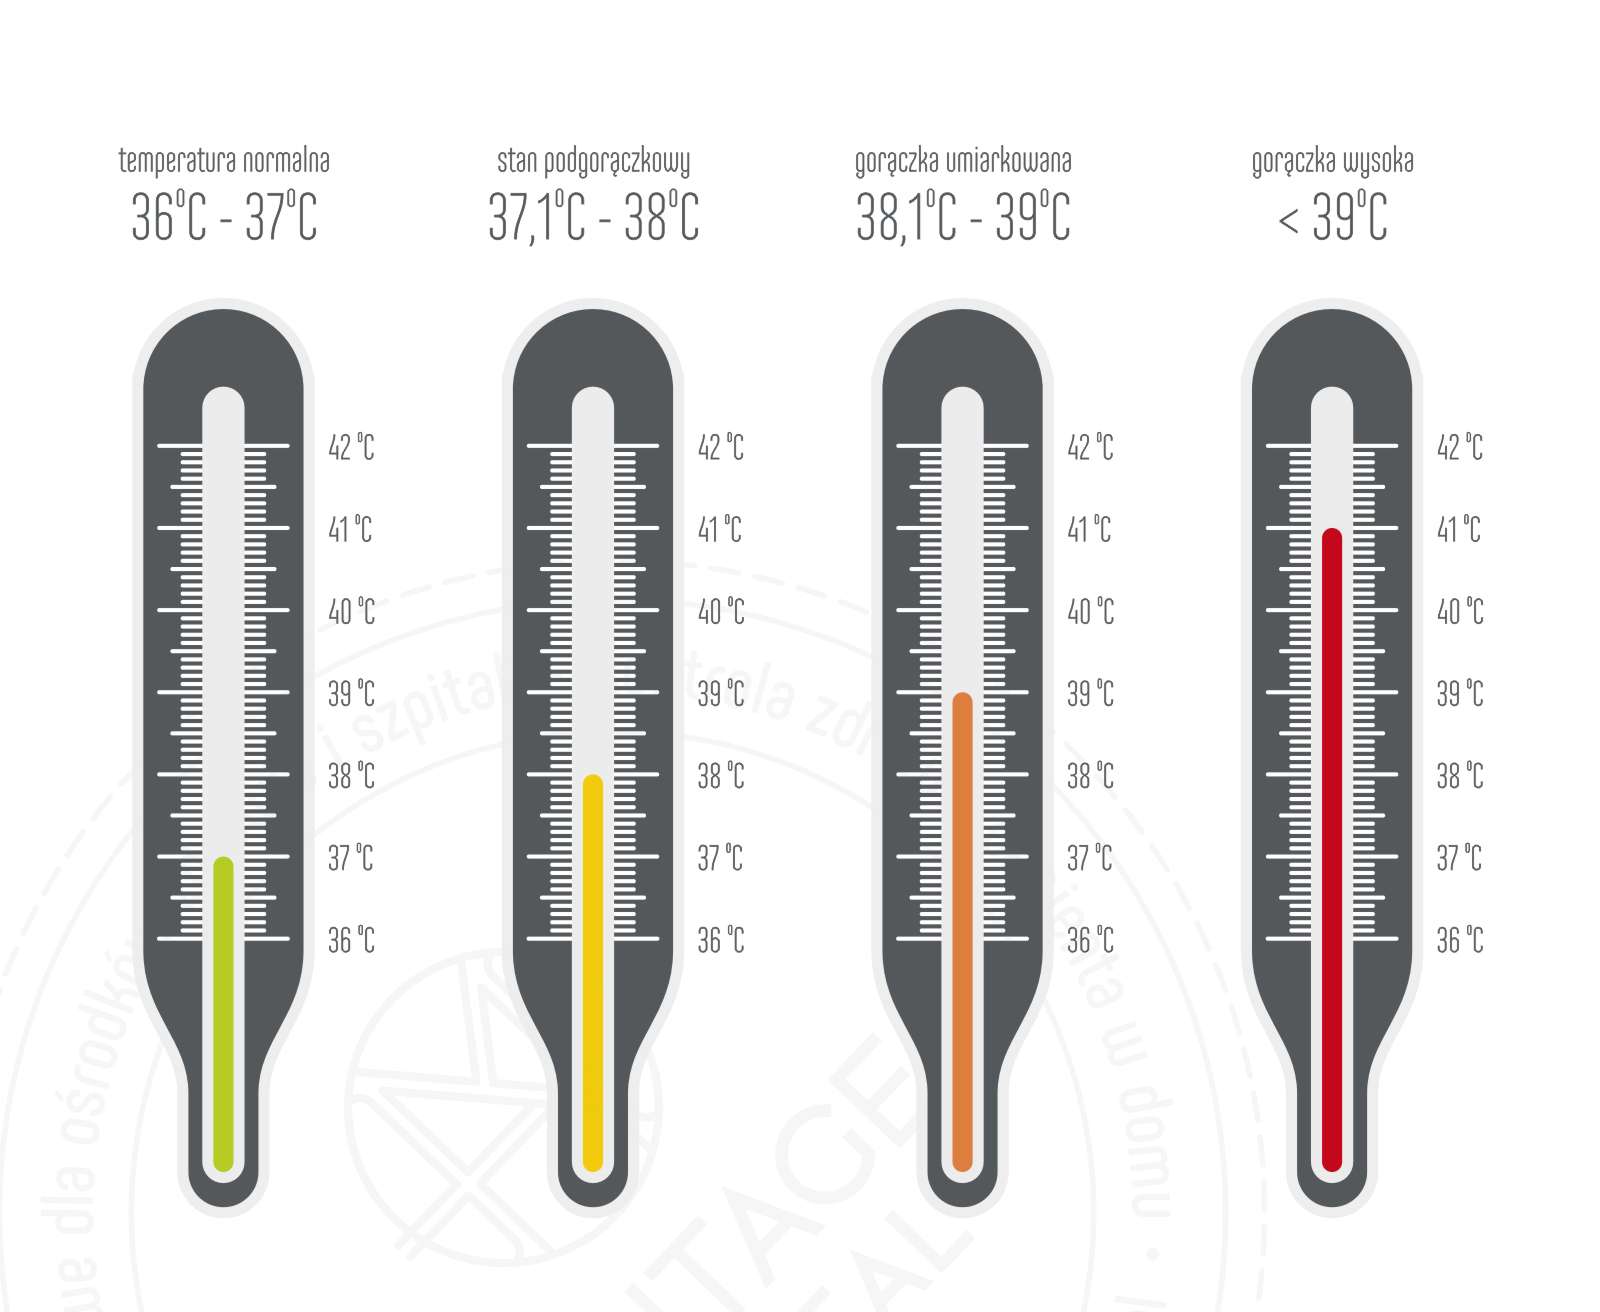 Temperatura ciała człowieka